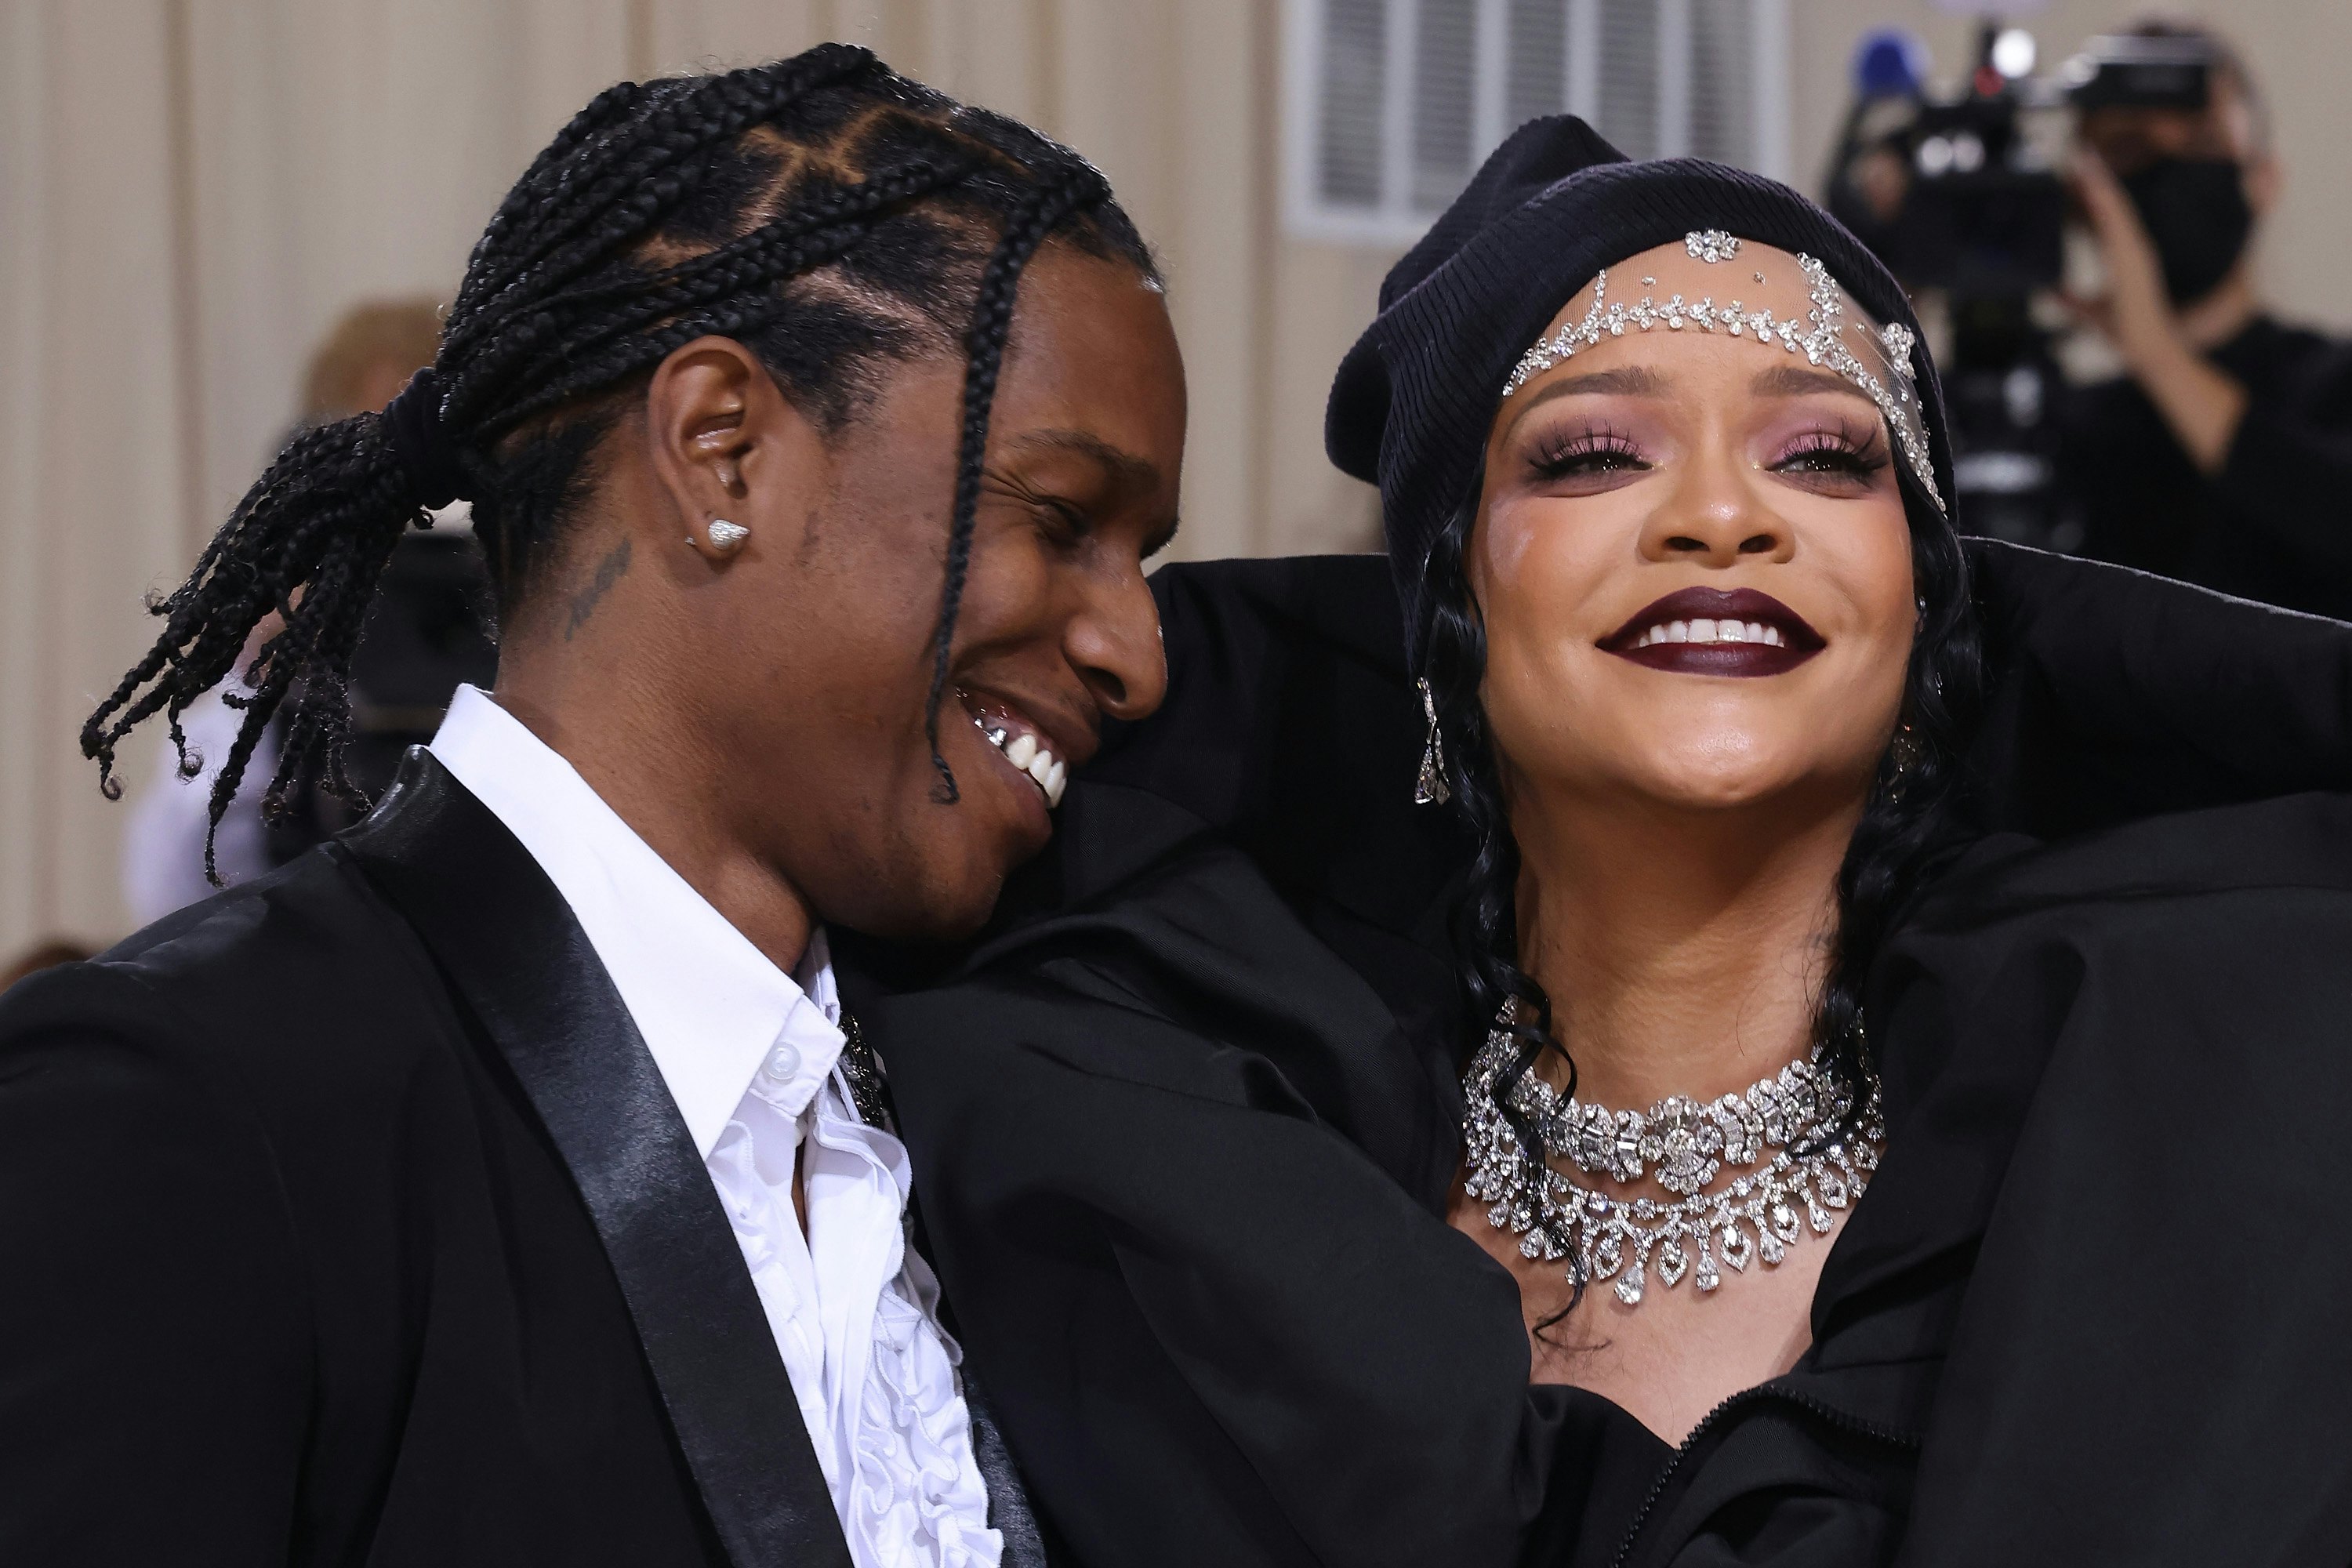 Rihanna's Net Worth: $210 Million In 2018